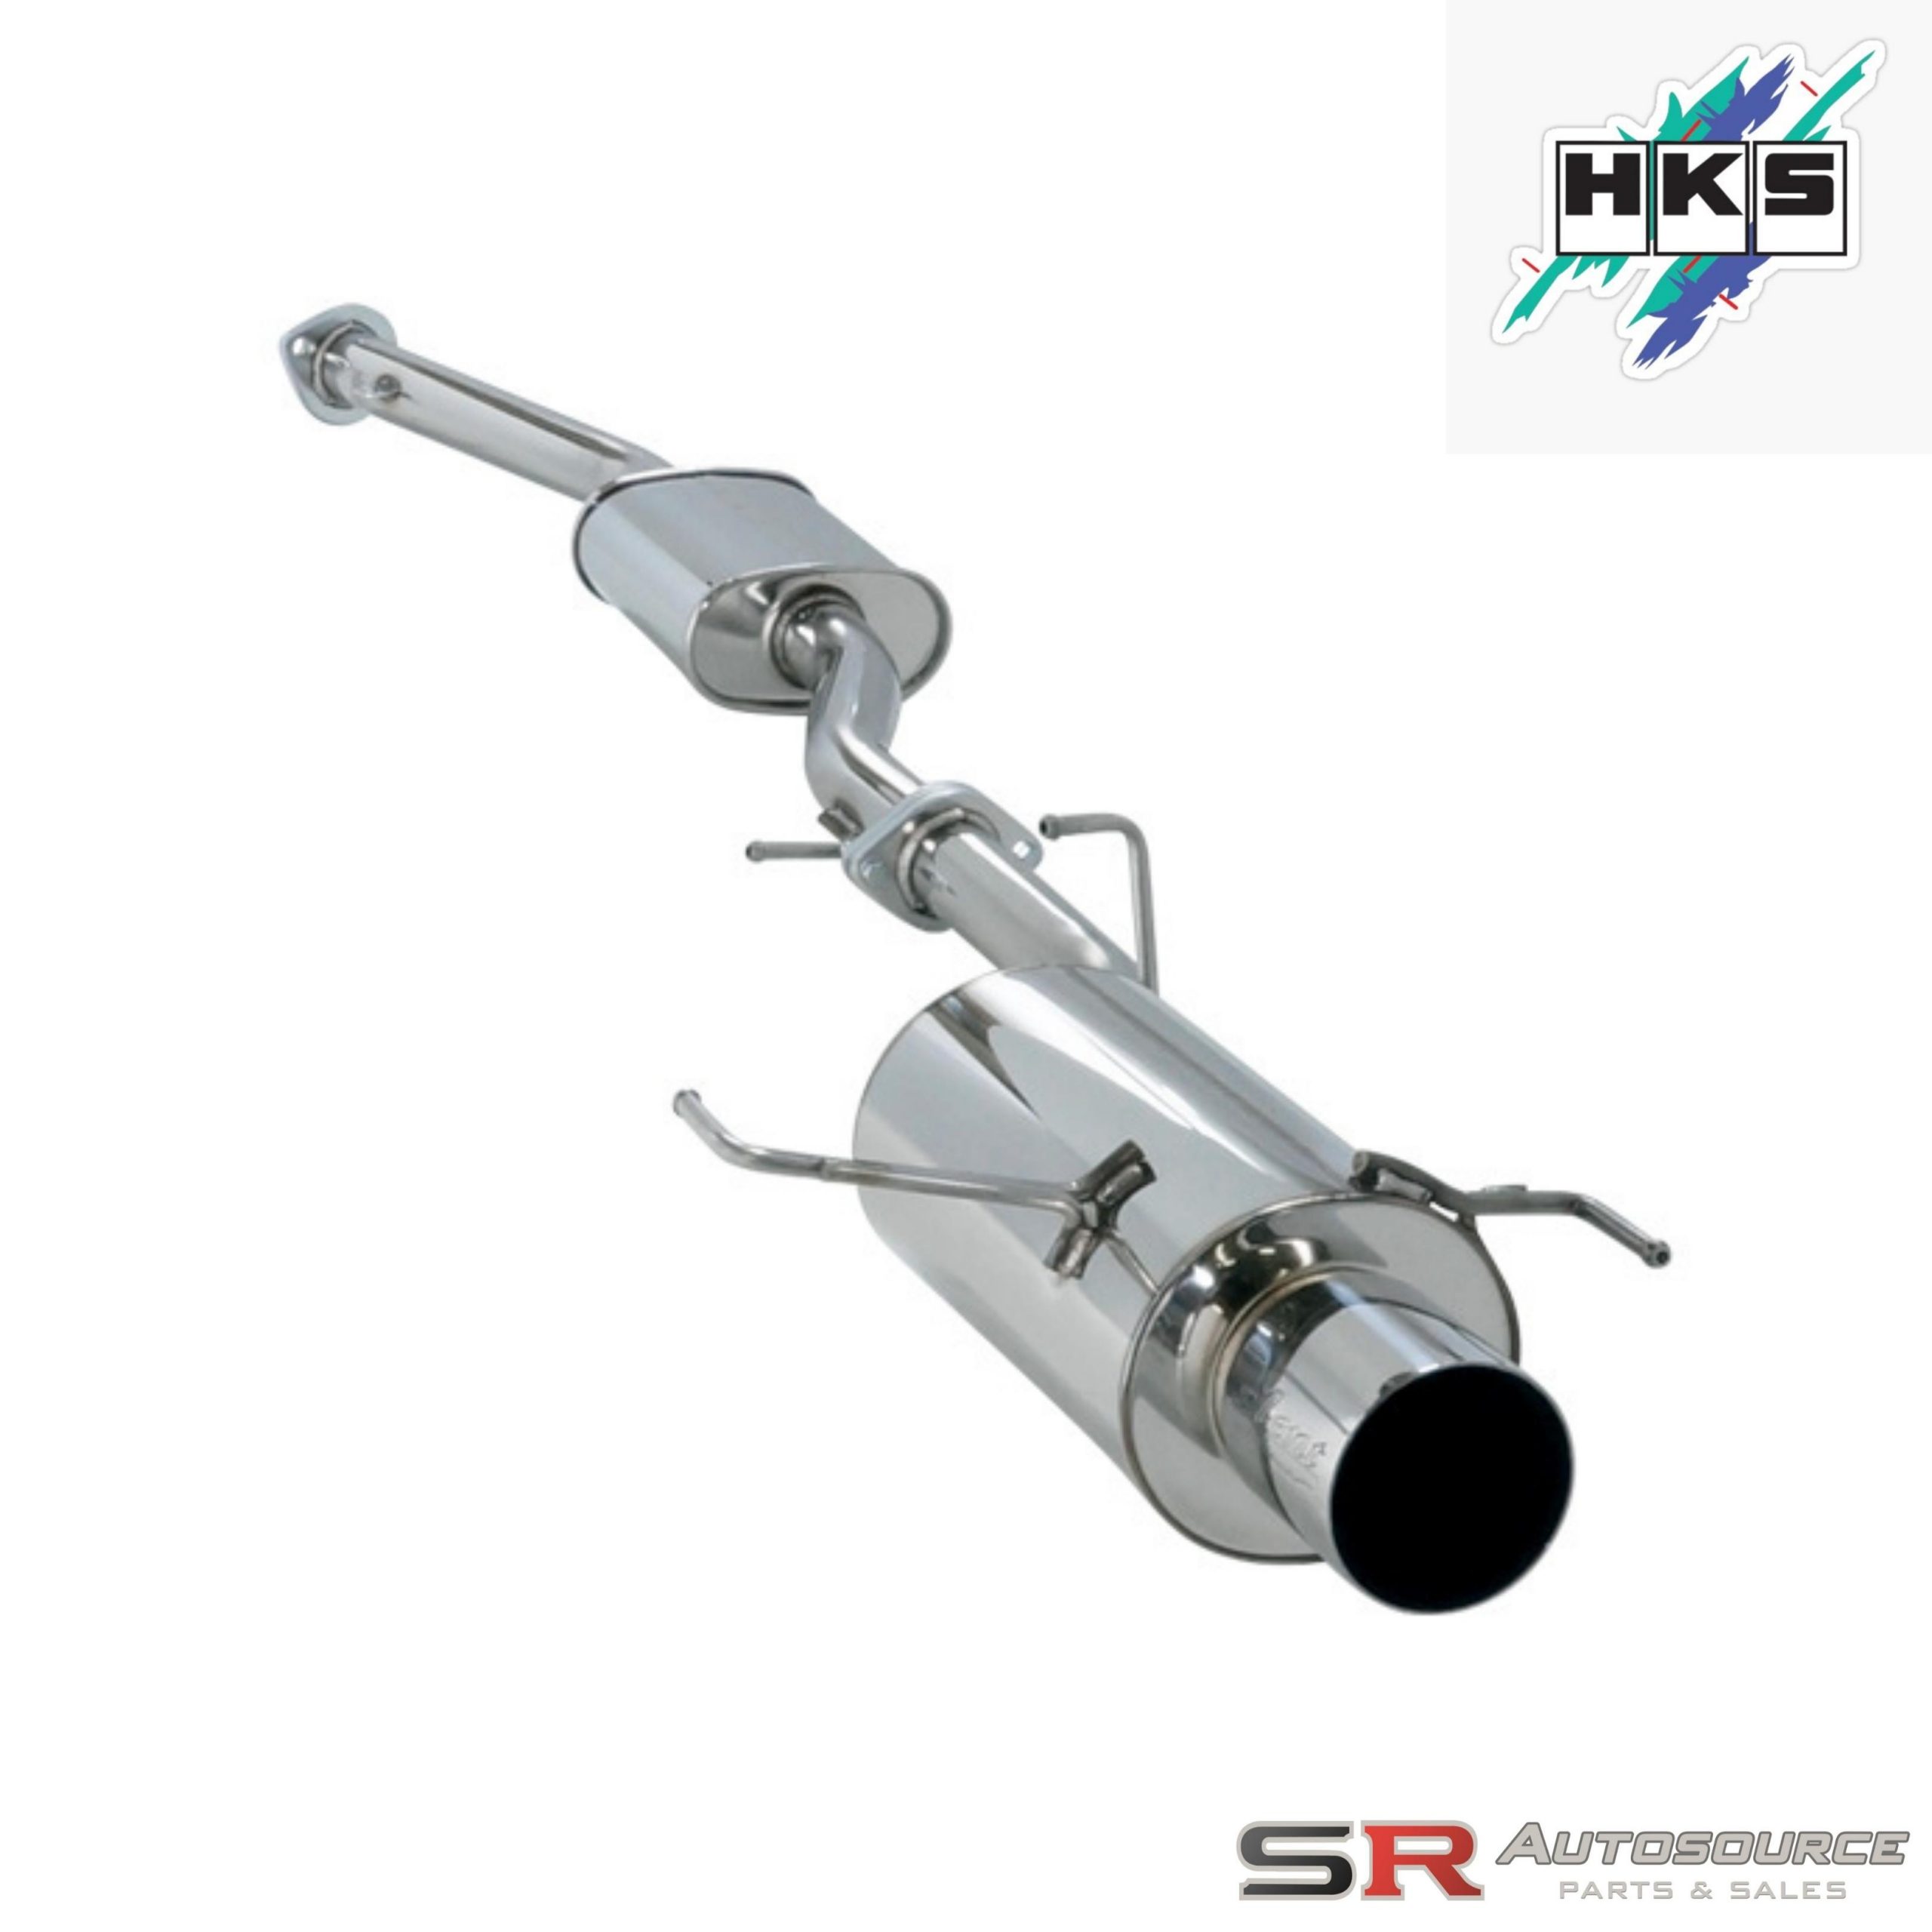 HKS Hi-Power Silent Exhaust for S15 Silvia Spec S